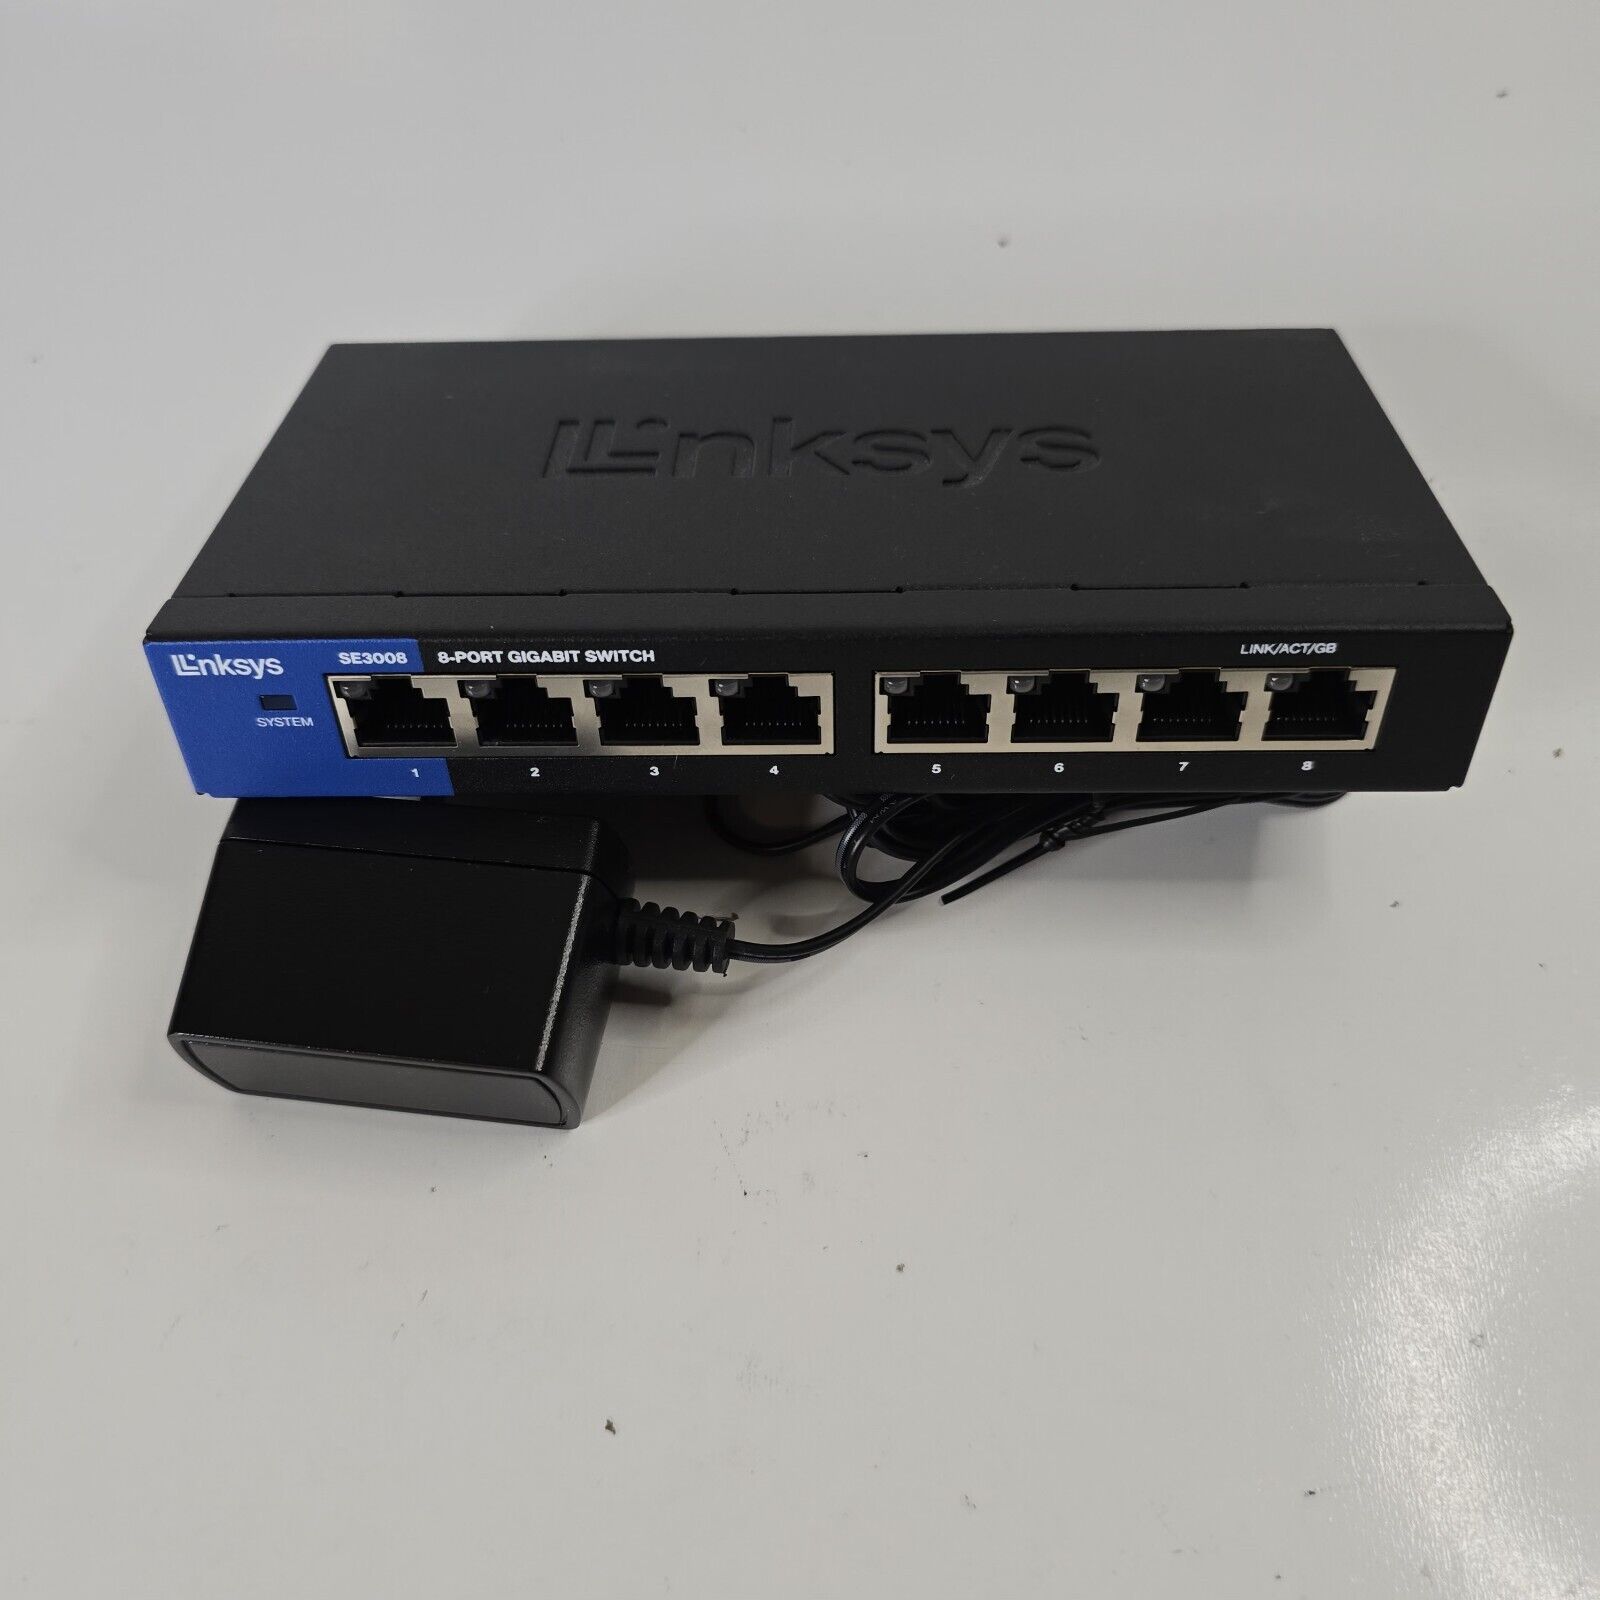 Linksys SE3008 8 Ports Gigabit Ethernet Switch.